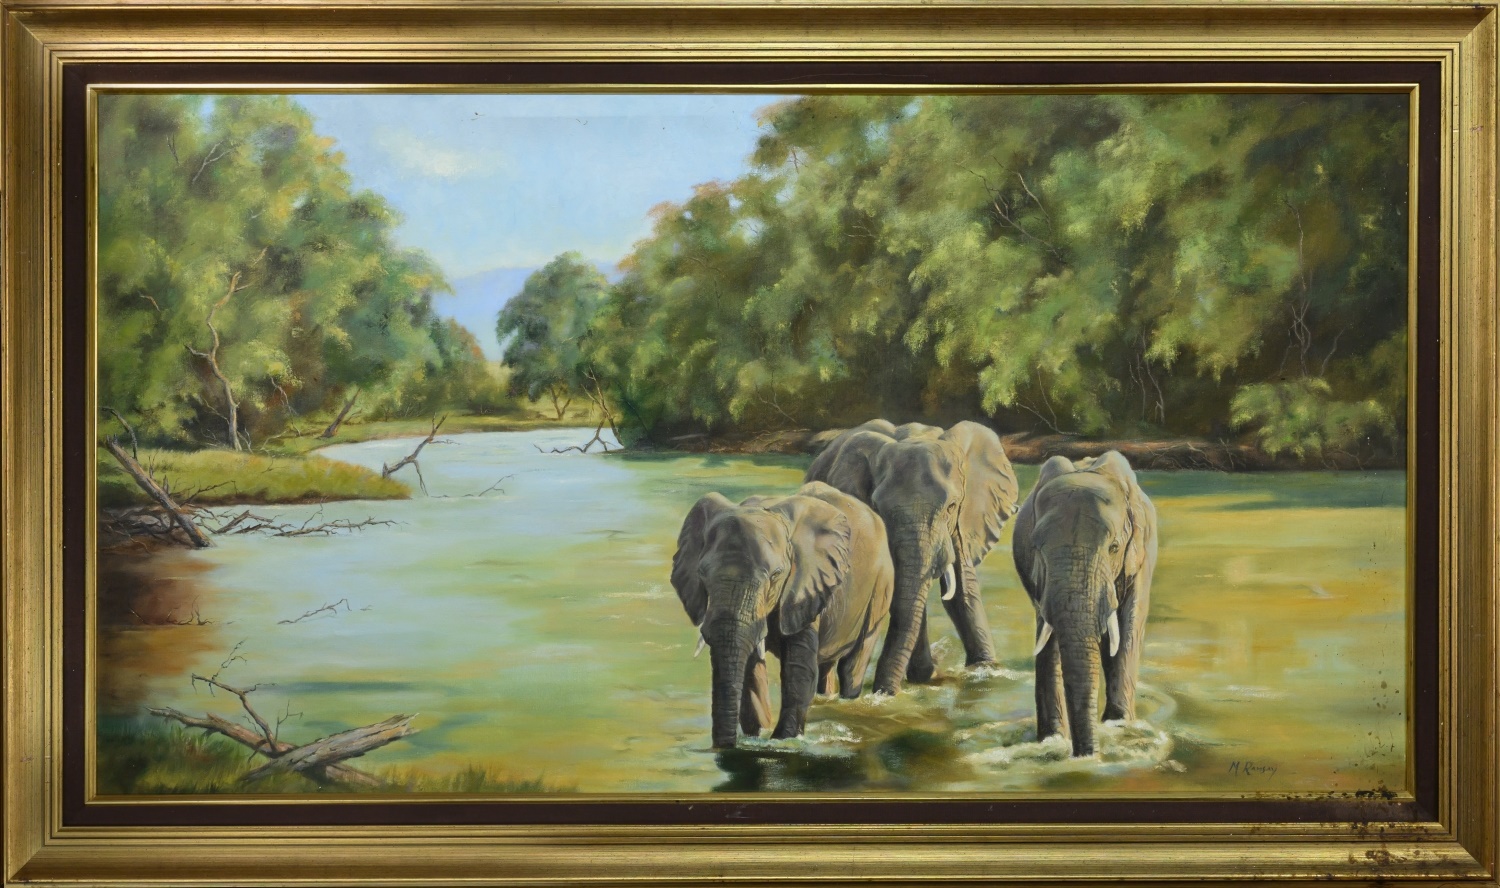 M RAMSAY (BRITISH 20TH CENTURY), ELEPHANTS IN THE SAVANNAH